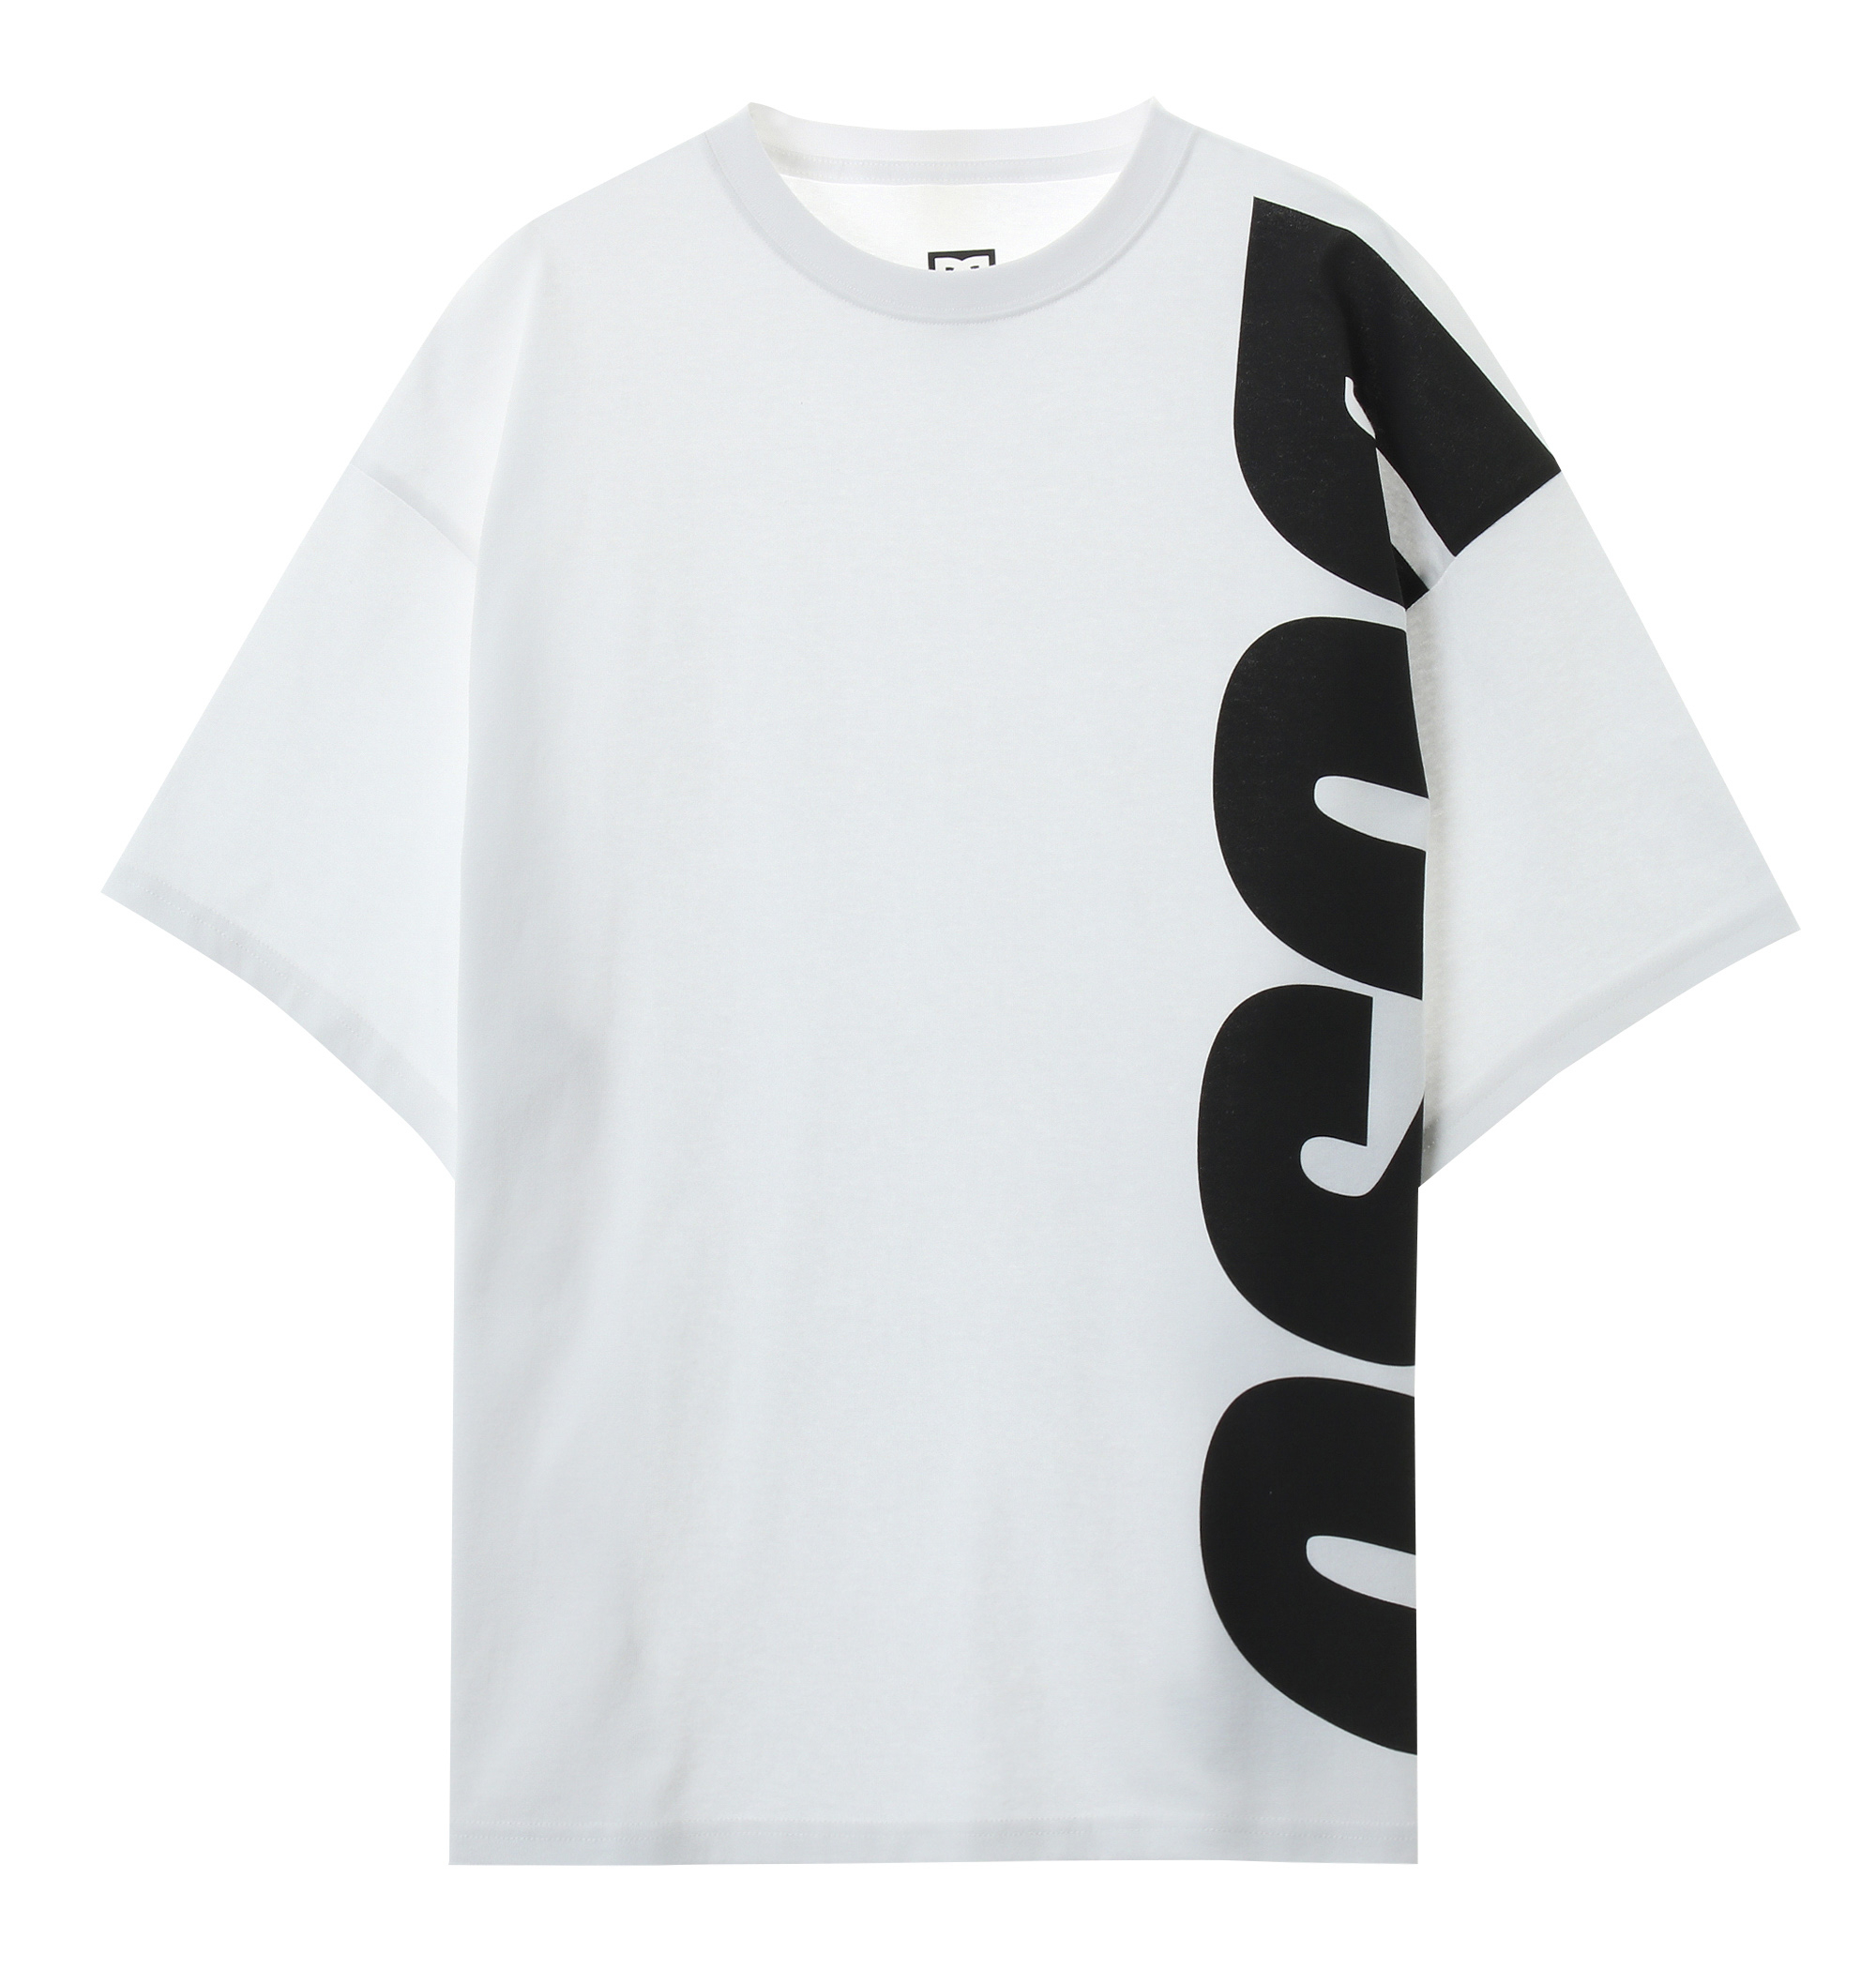 30%OFF！ 21 20S WIDE DCSC VERTICAL SS シンプルなデザインにビッグロゴをプリントして存在感を高めた半袖Tシャツ